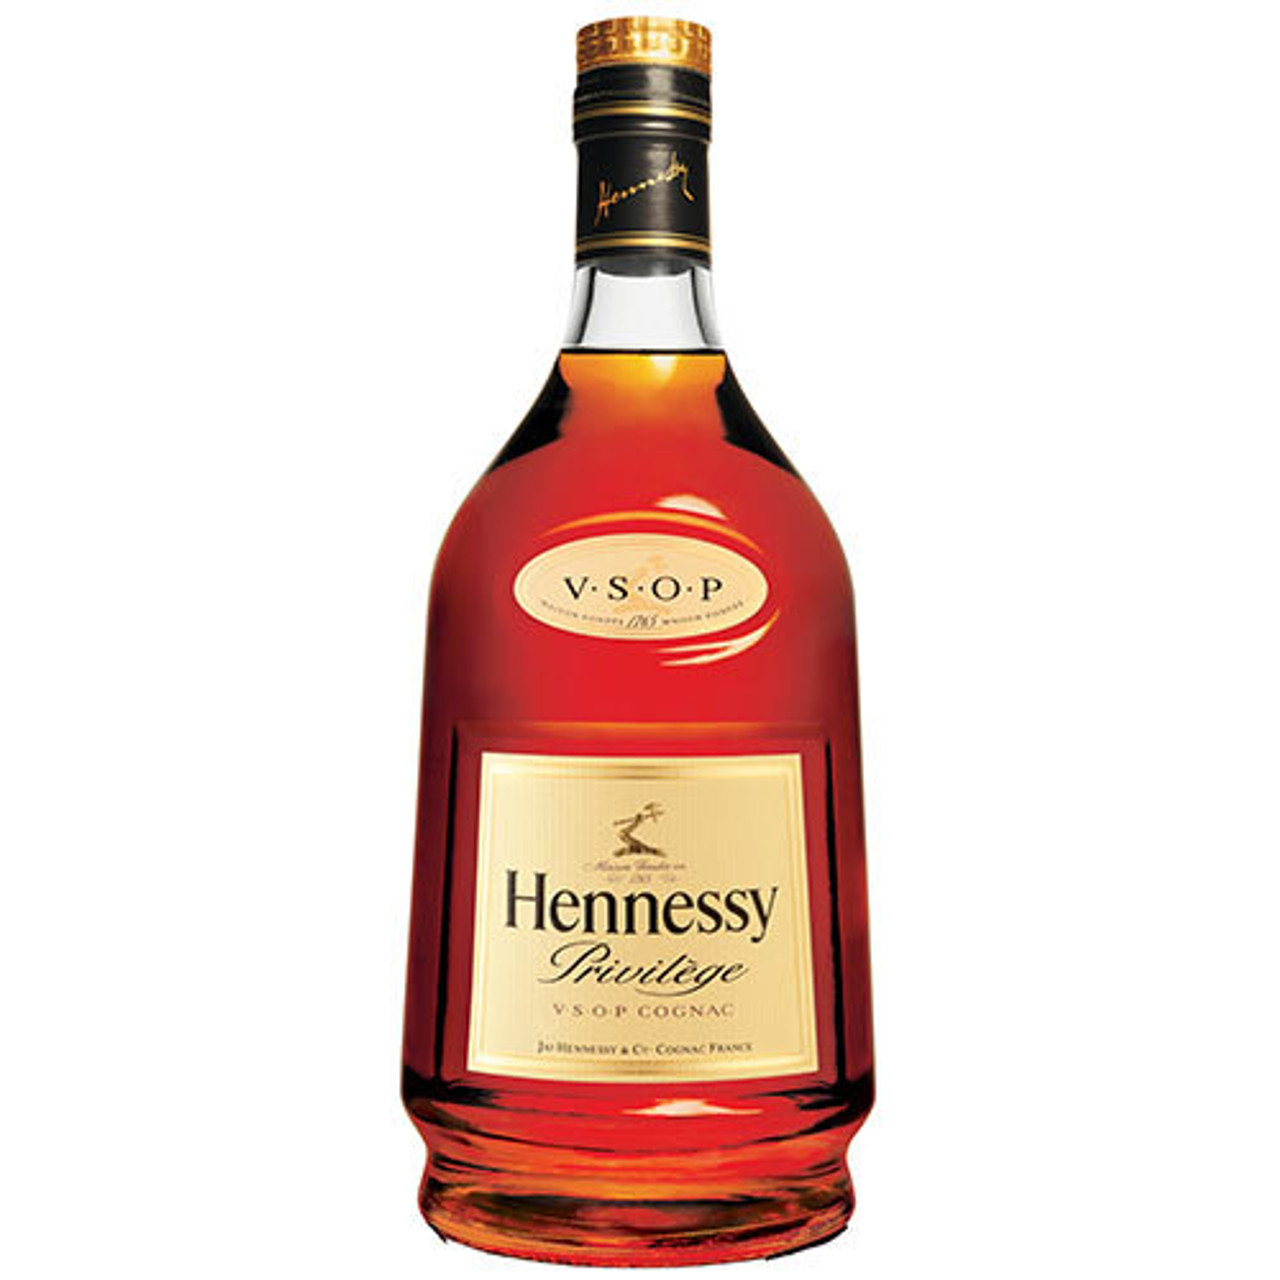 Hennessy Privilege VSOP Cognac 100ML - London Terrace Liquor, New